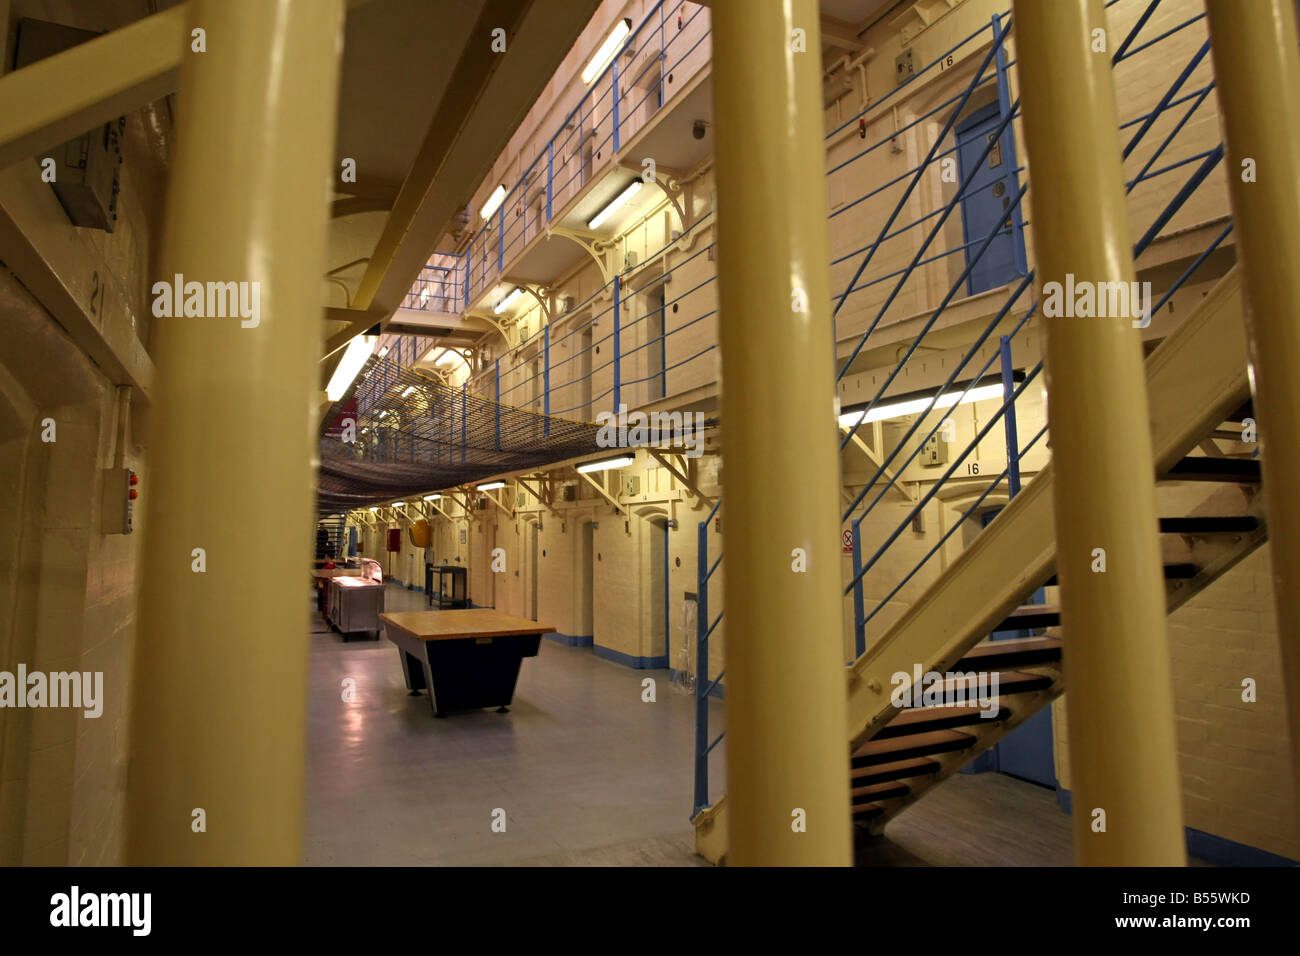 'A' Hall in Craiginches prison in Aberdeen city, Scotland, UK Stock Photo